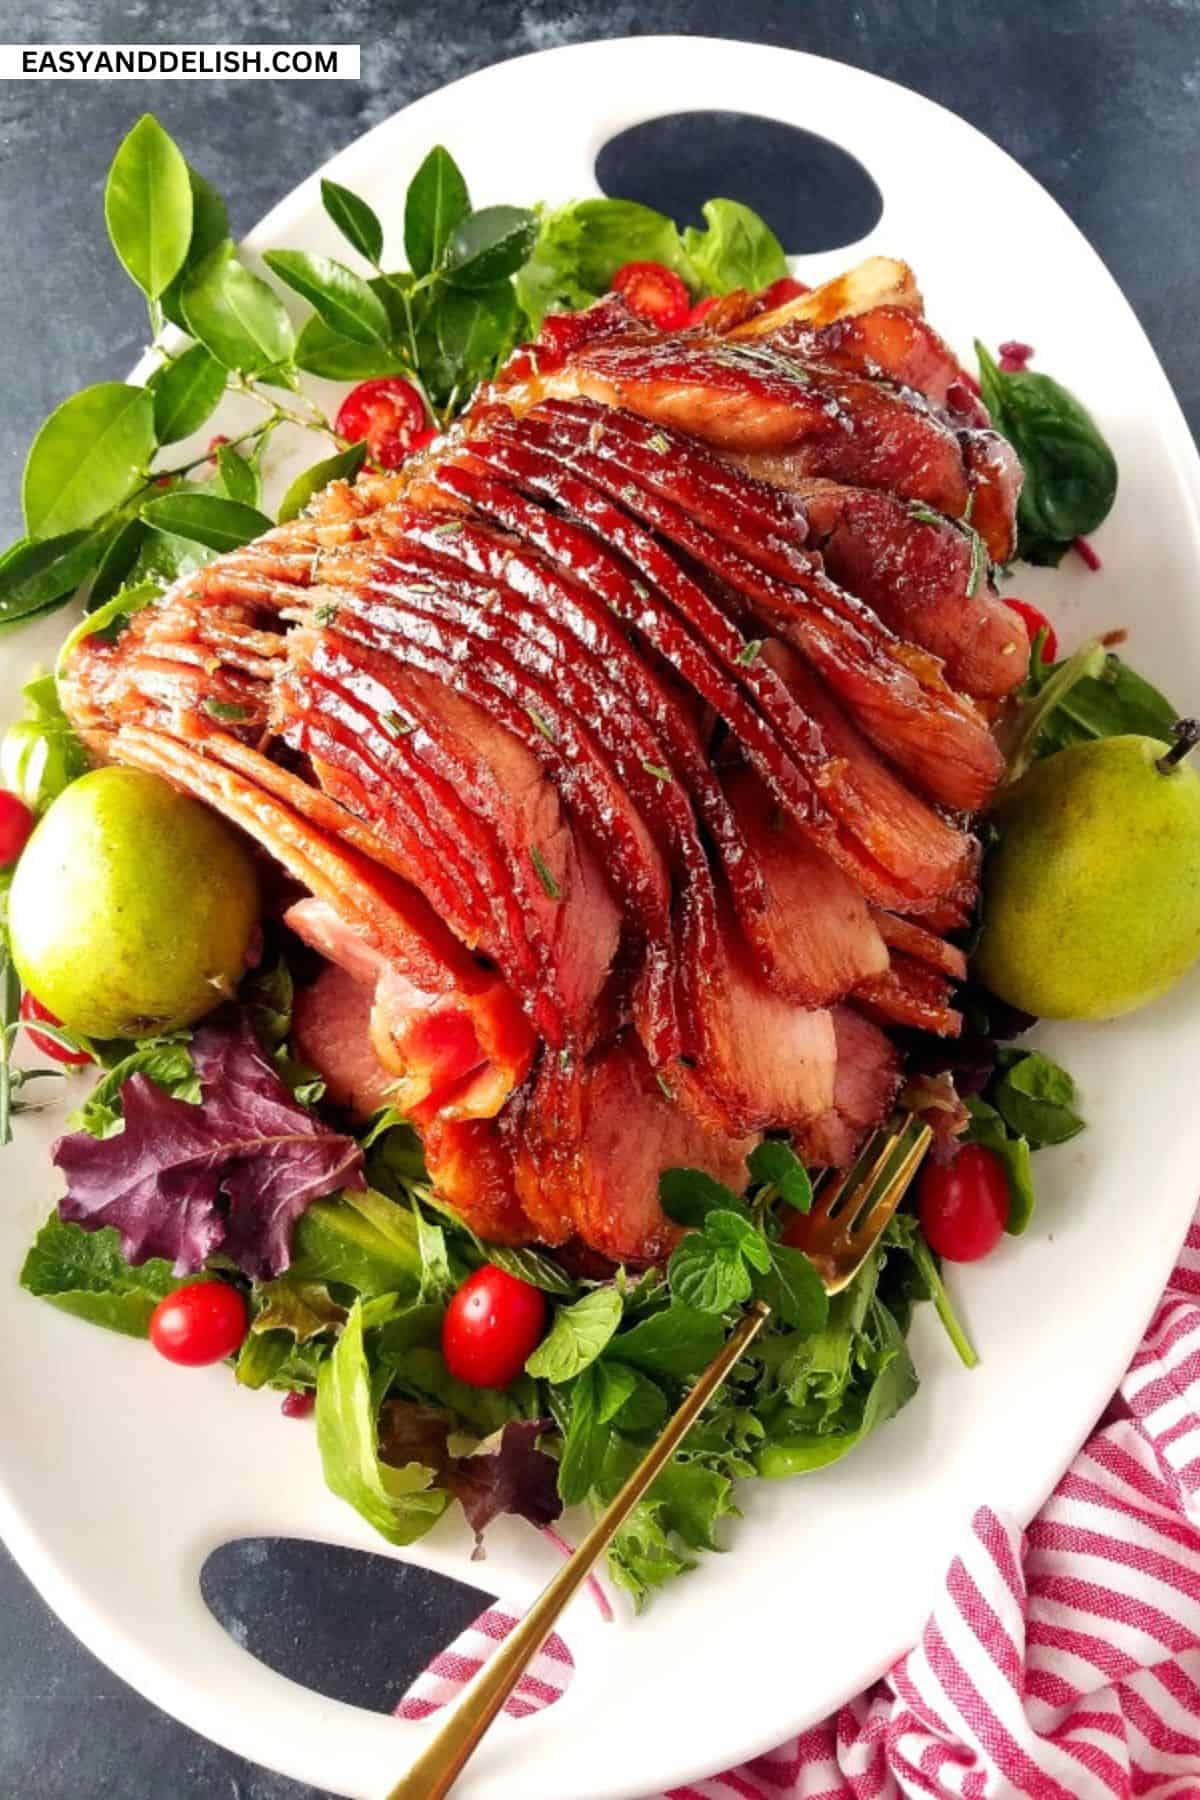 Honey baked glazed ham in a platter with some seasonal garnishes.